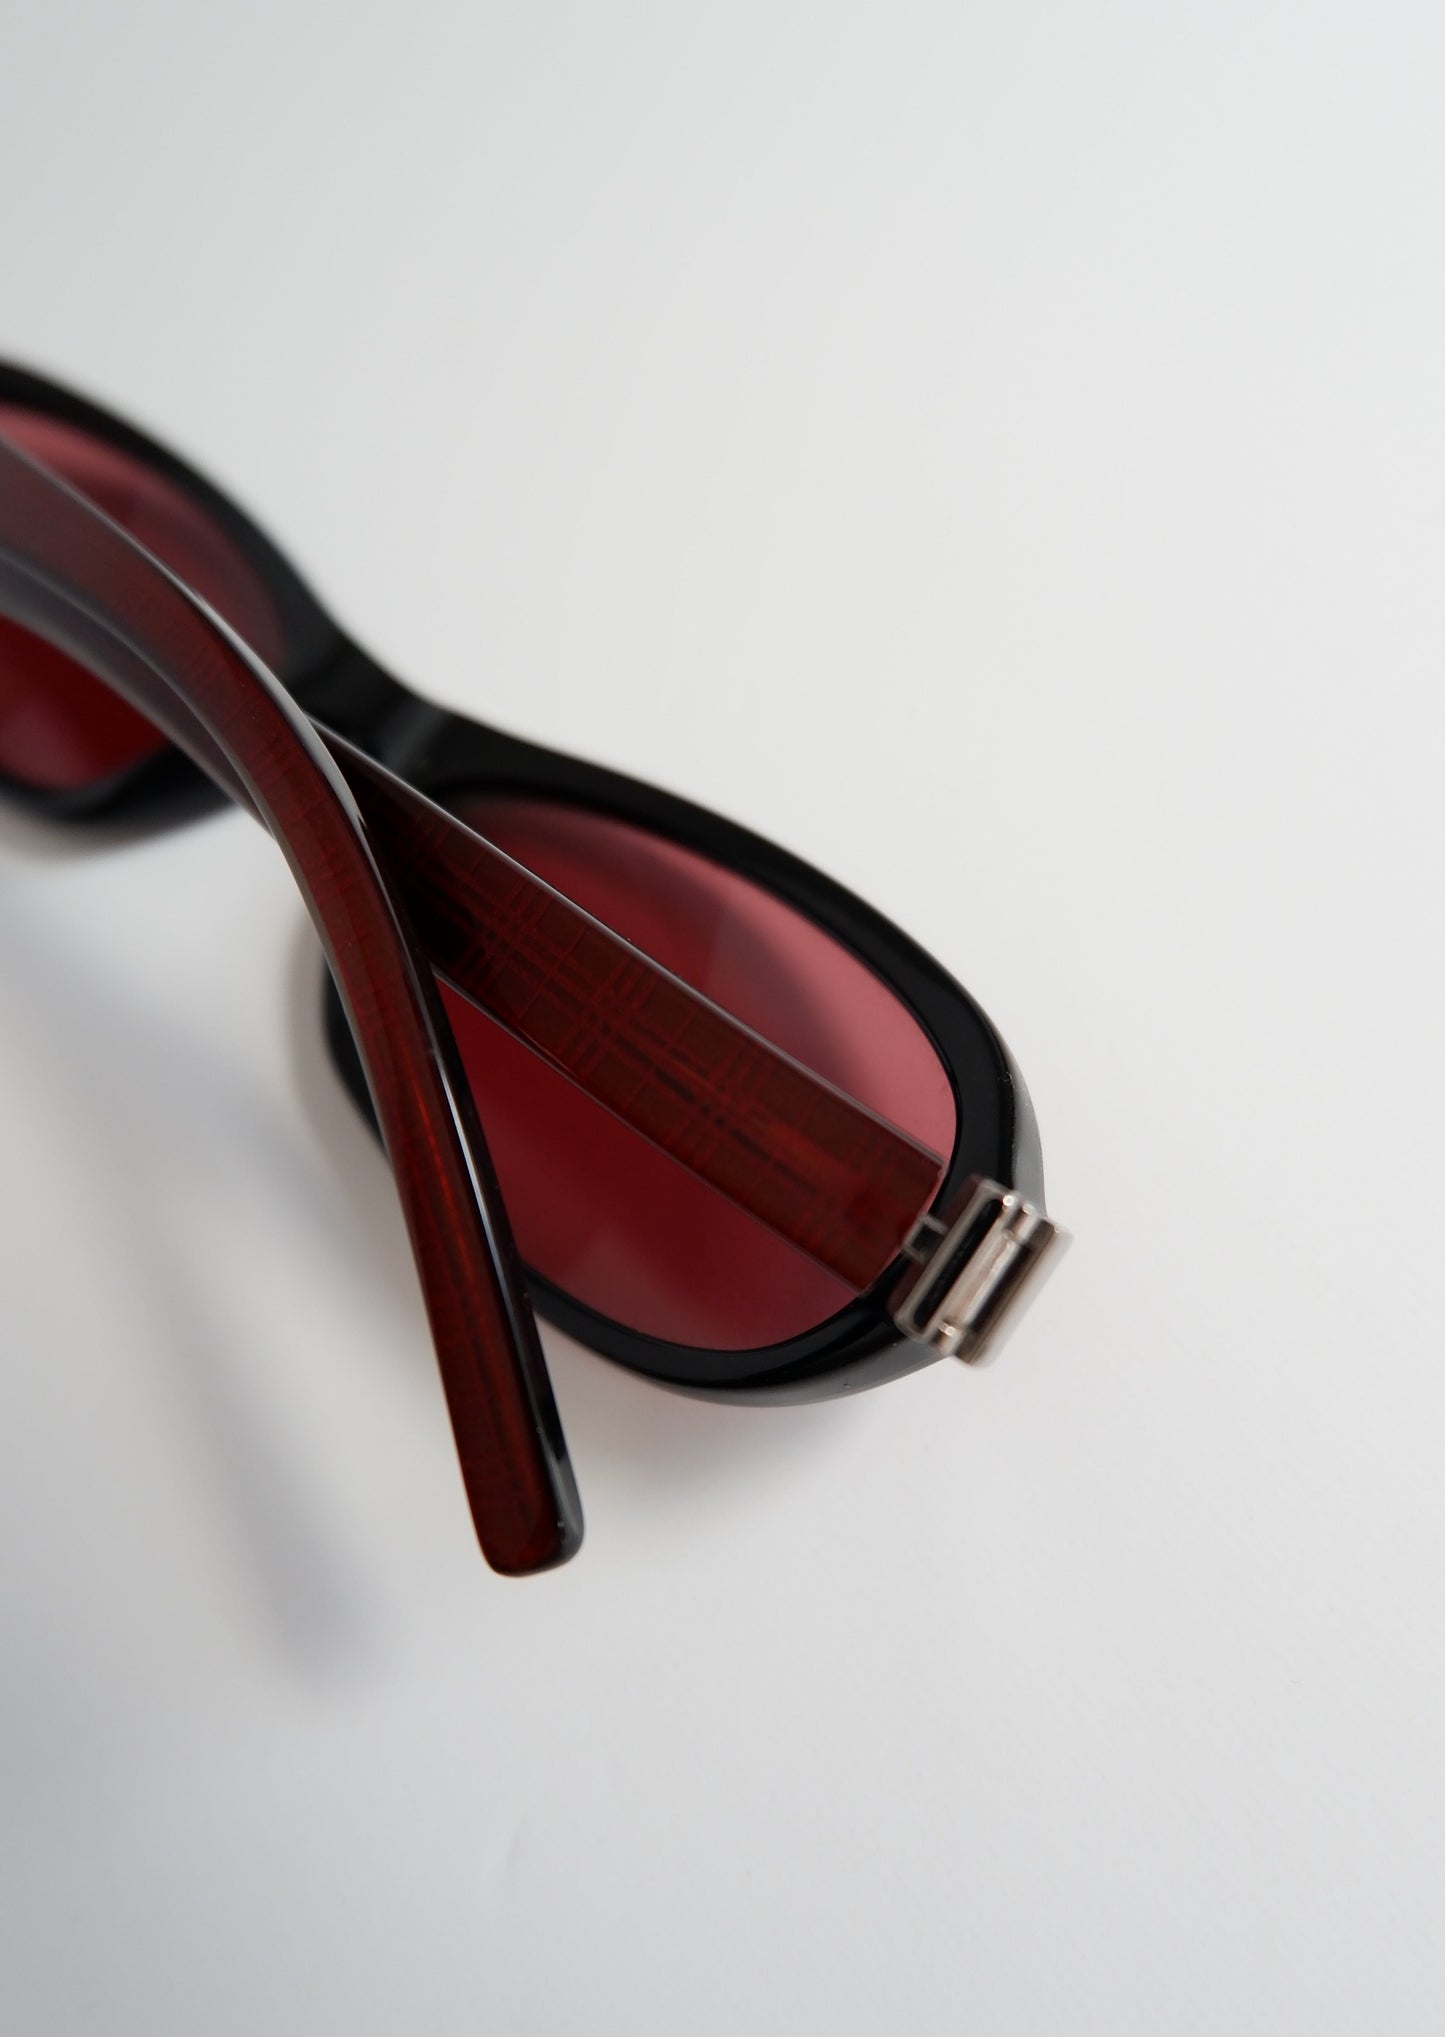 Authentic Preowned Burberry Red Acetate Novacheck Sunglasses